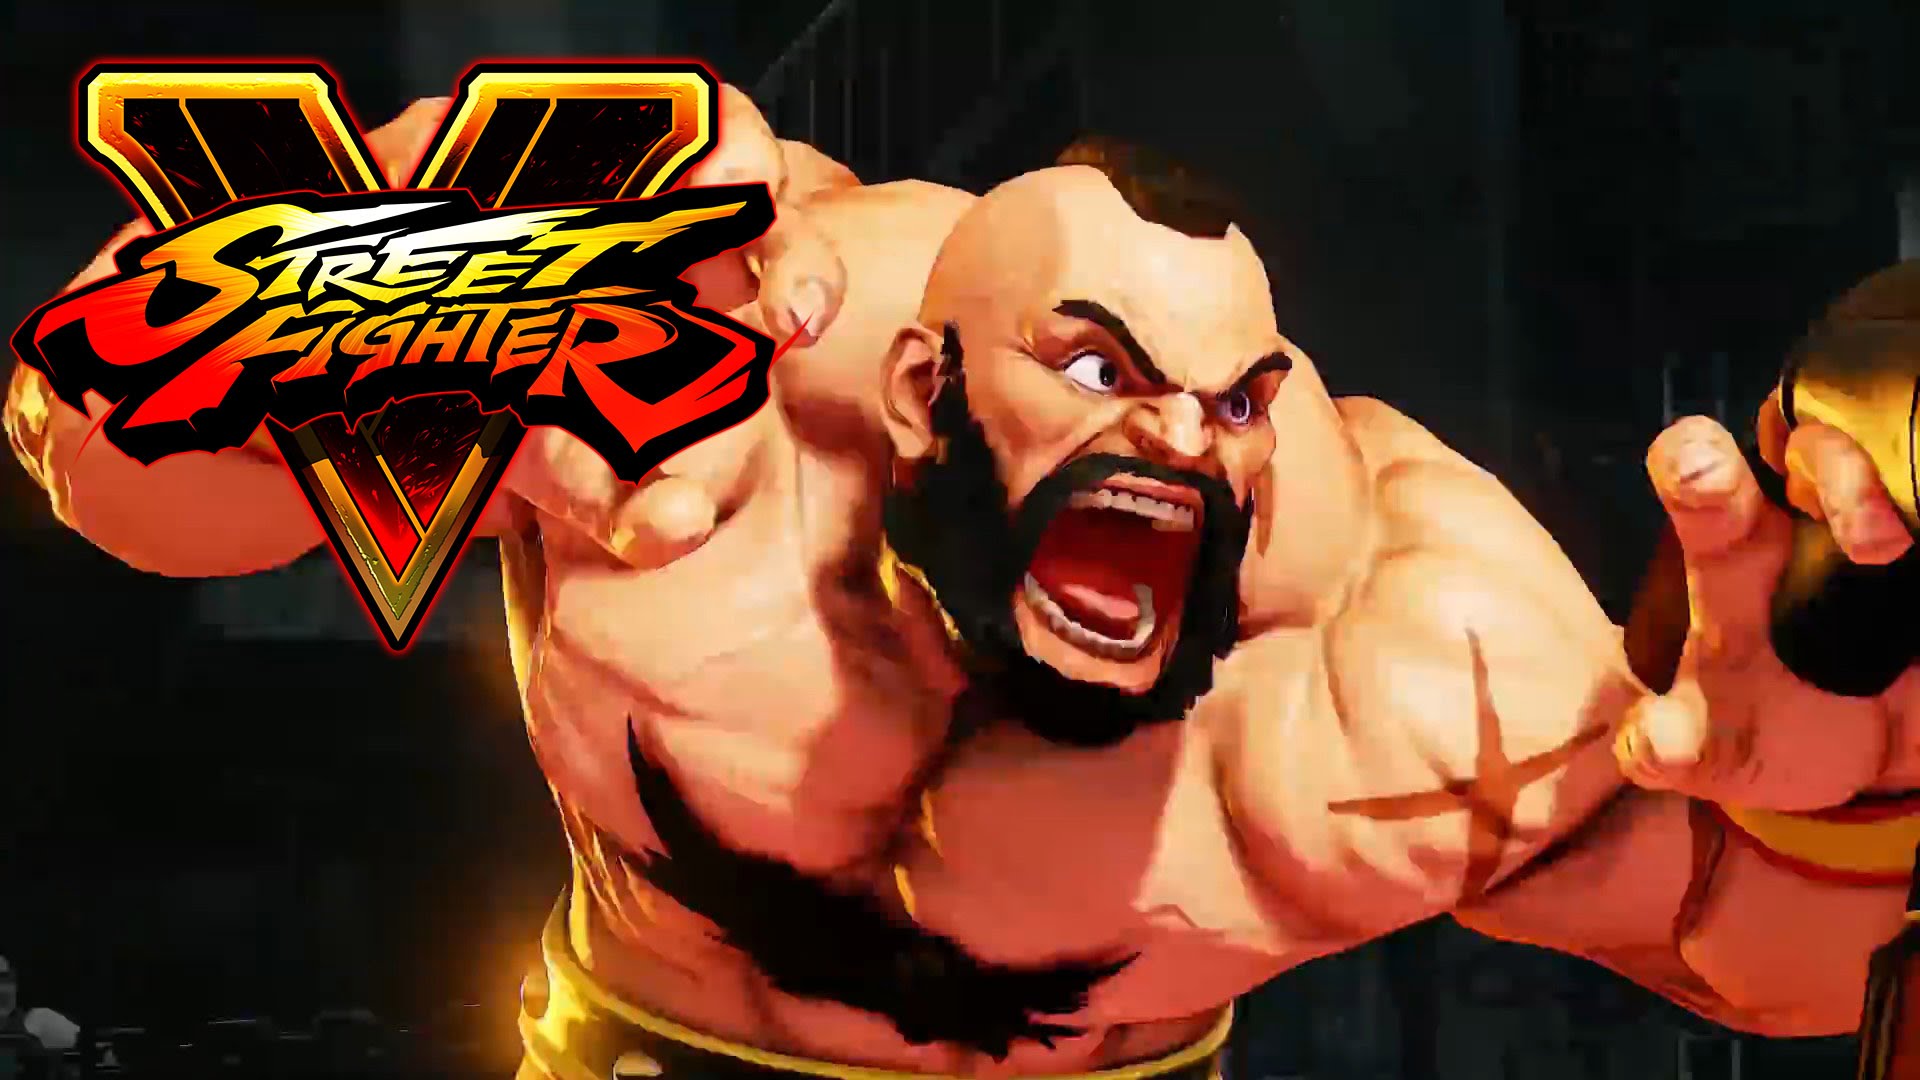 Street Fighter V - Zangief Reveal Trailer (1080p 60fps) - YouTube